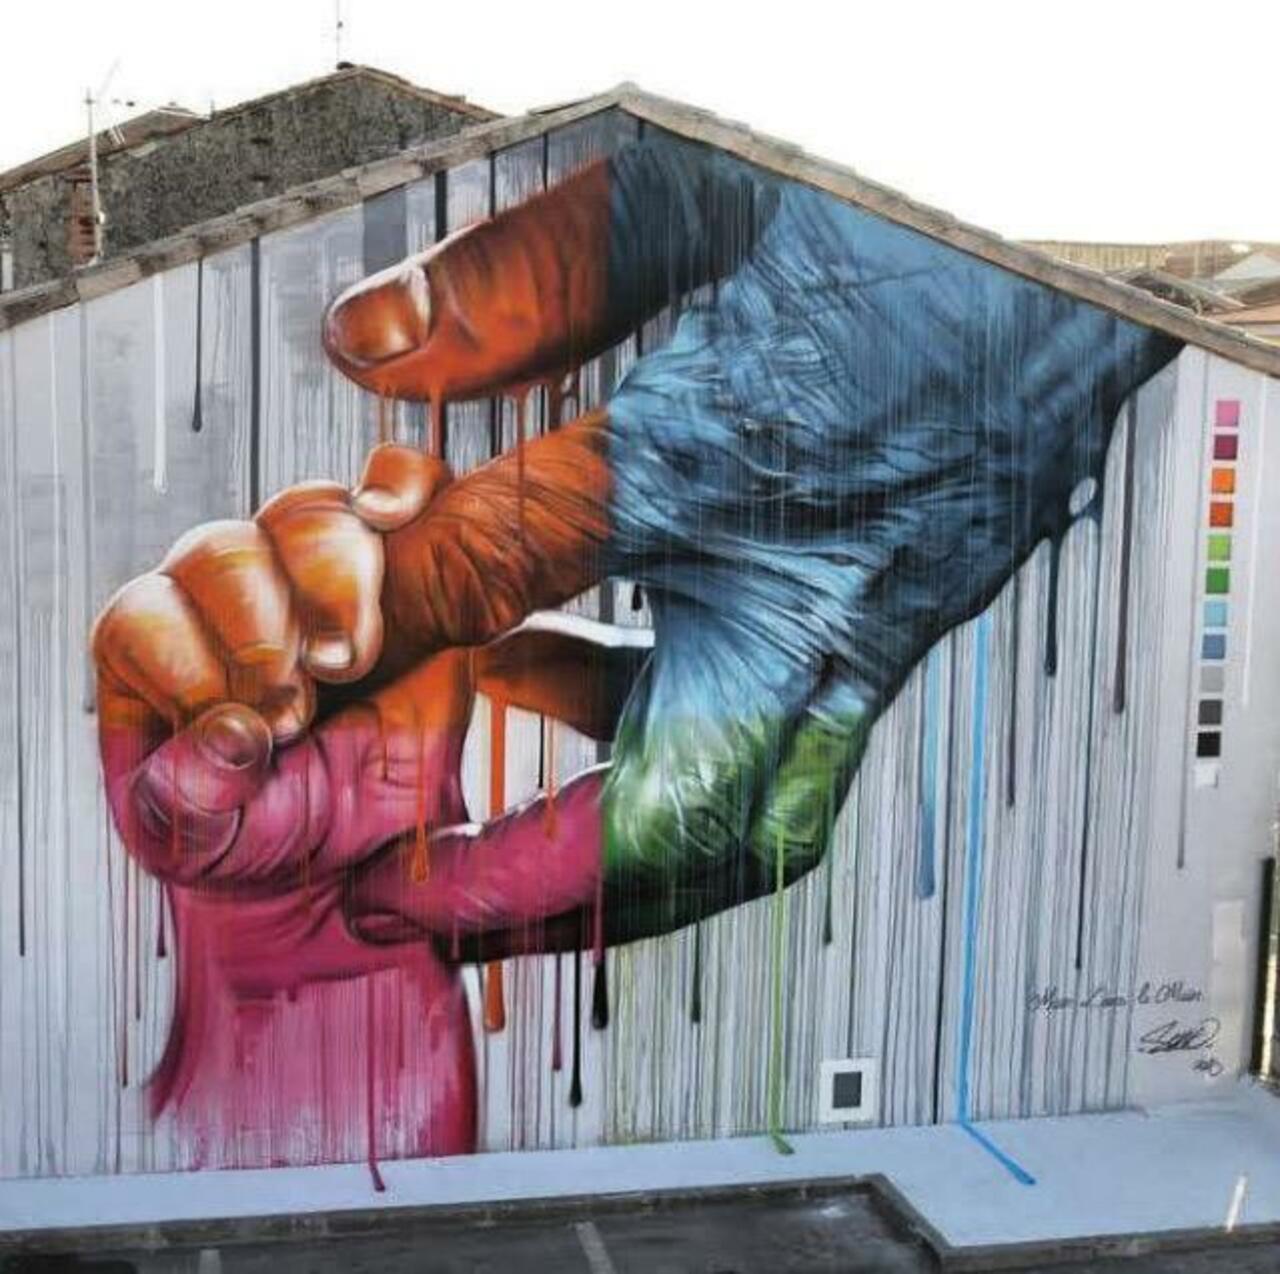 Seno Street Art 

#art #graffiti #mural #streetart http://t.co/2hjkZCifhG googlestreetart chinatoniq